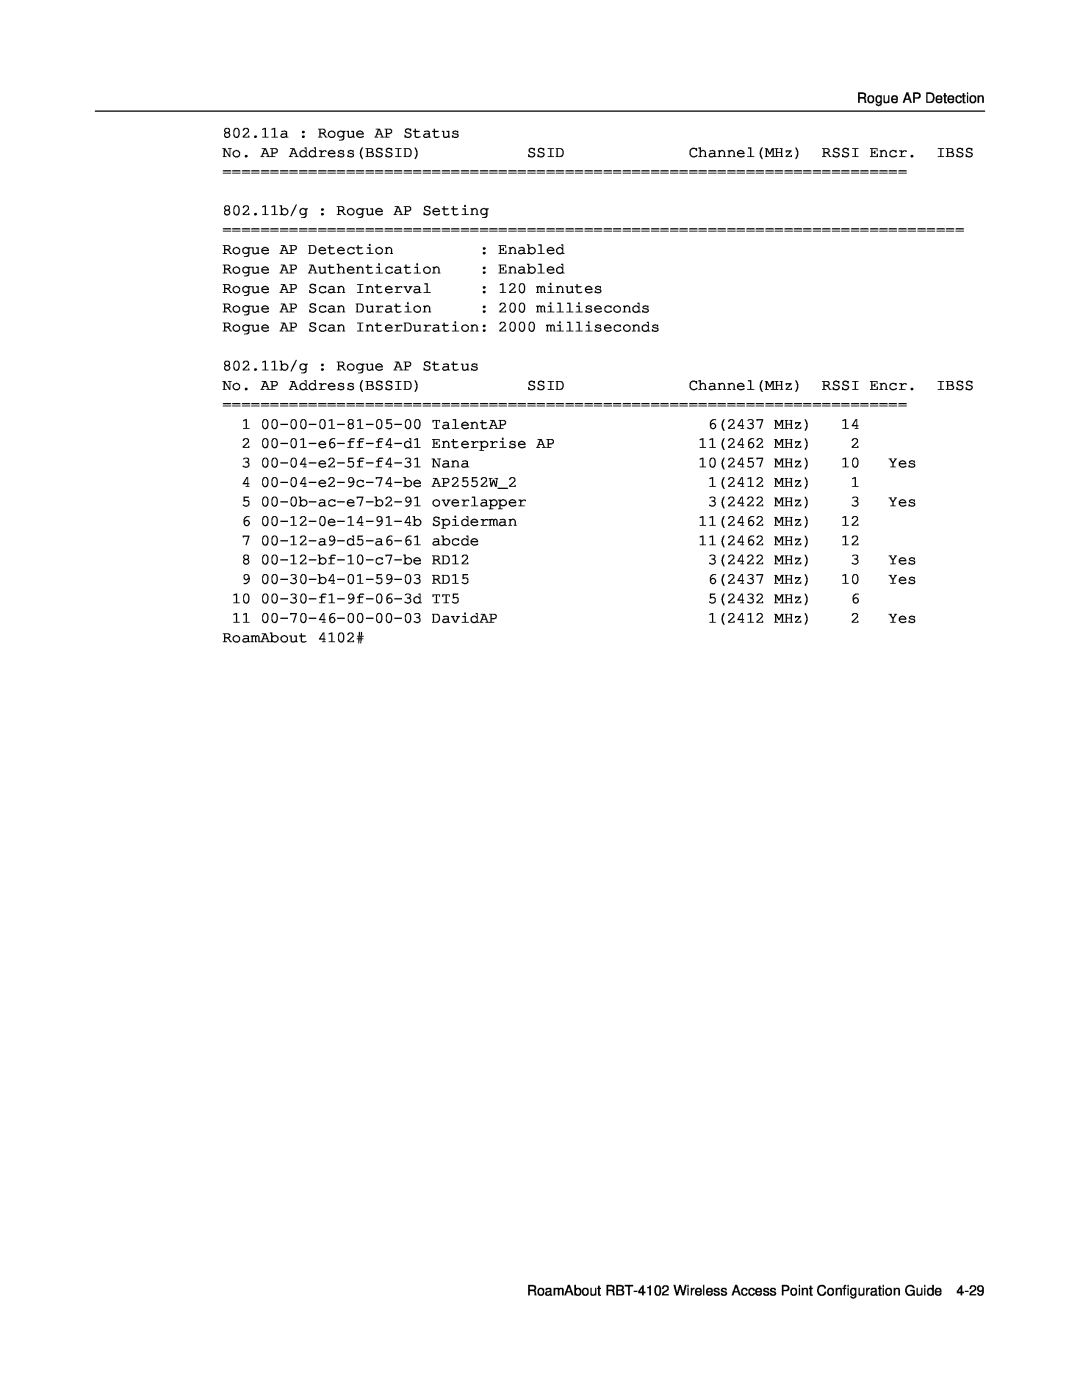 Enterasys Networks RBT-4102 manual 802.11a Rogue AP Status 